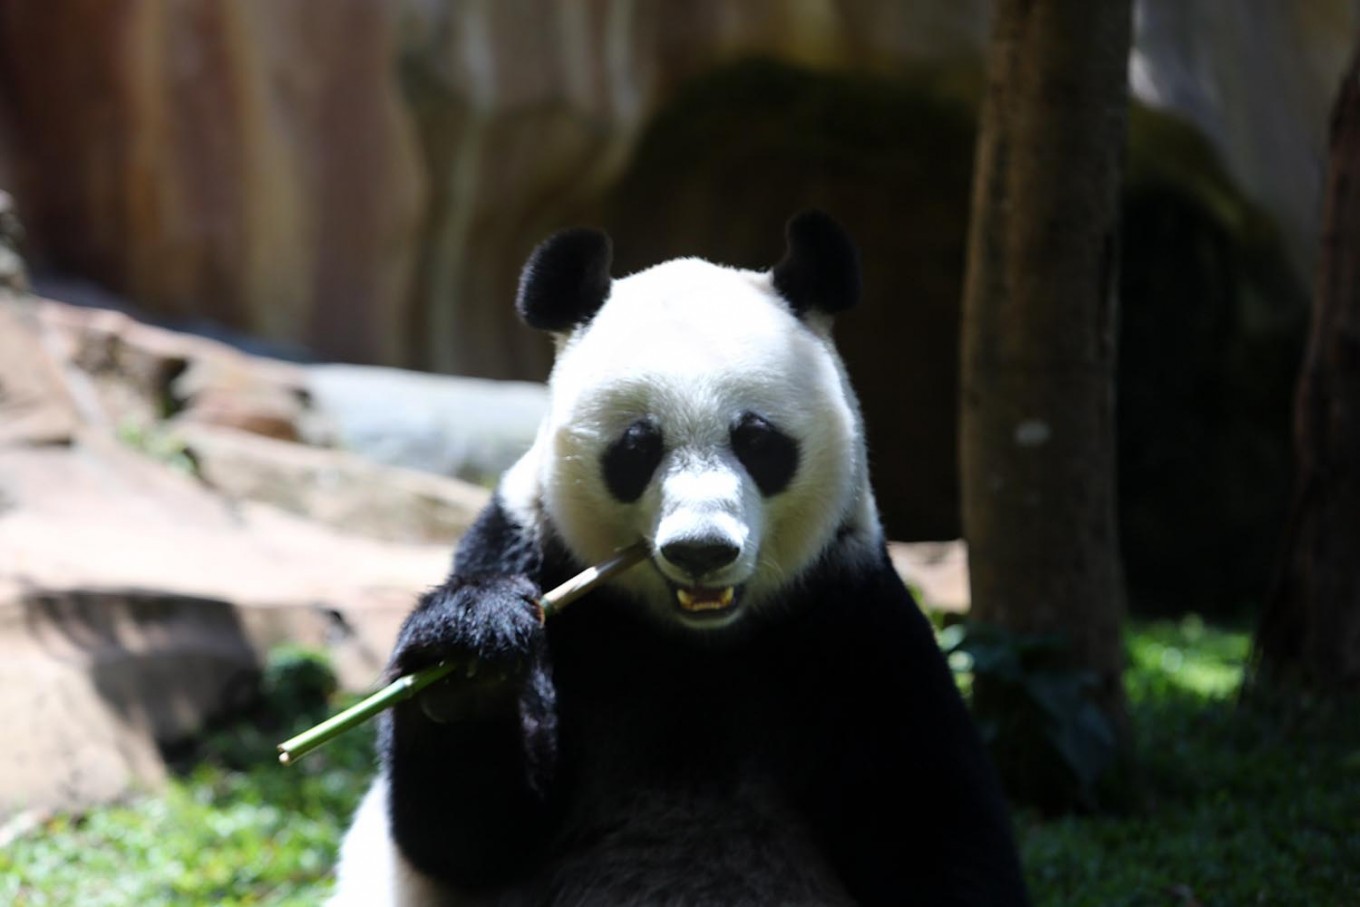 Taman Safari celebrates five years of Indonesia-China panda conservation